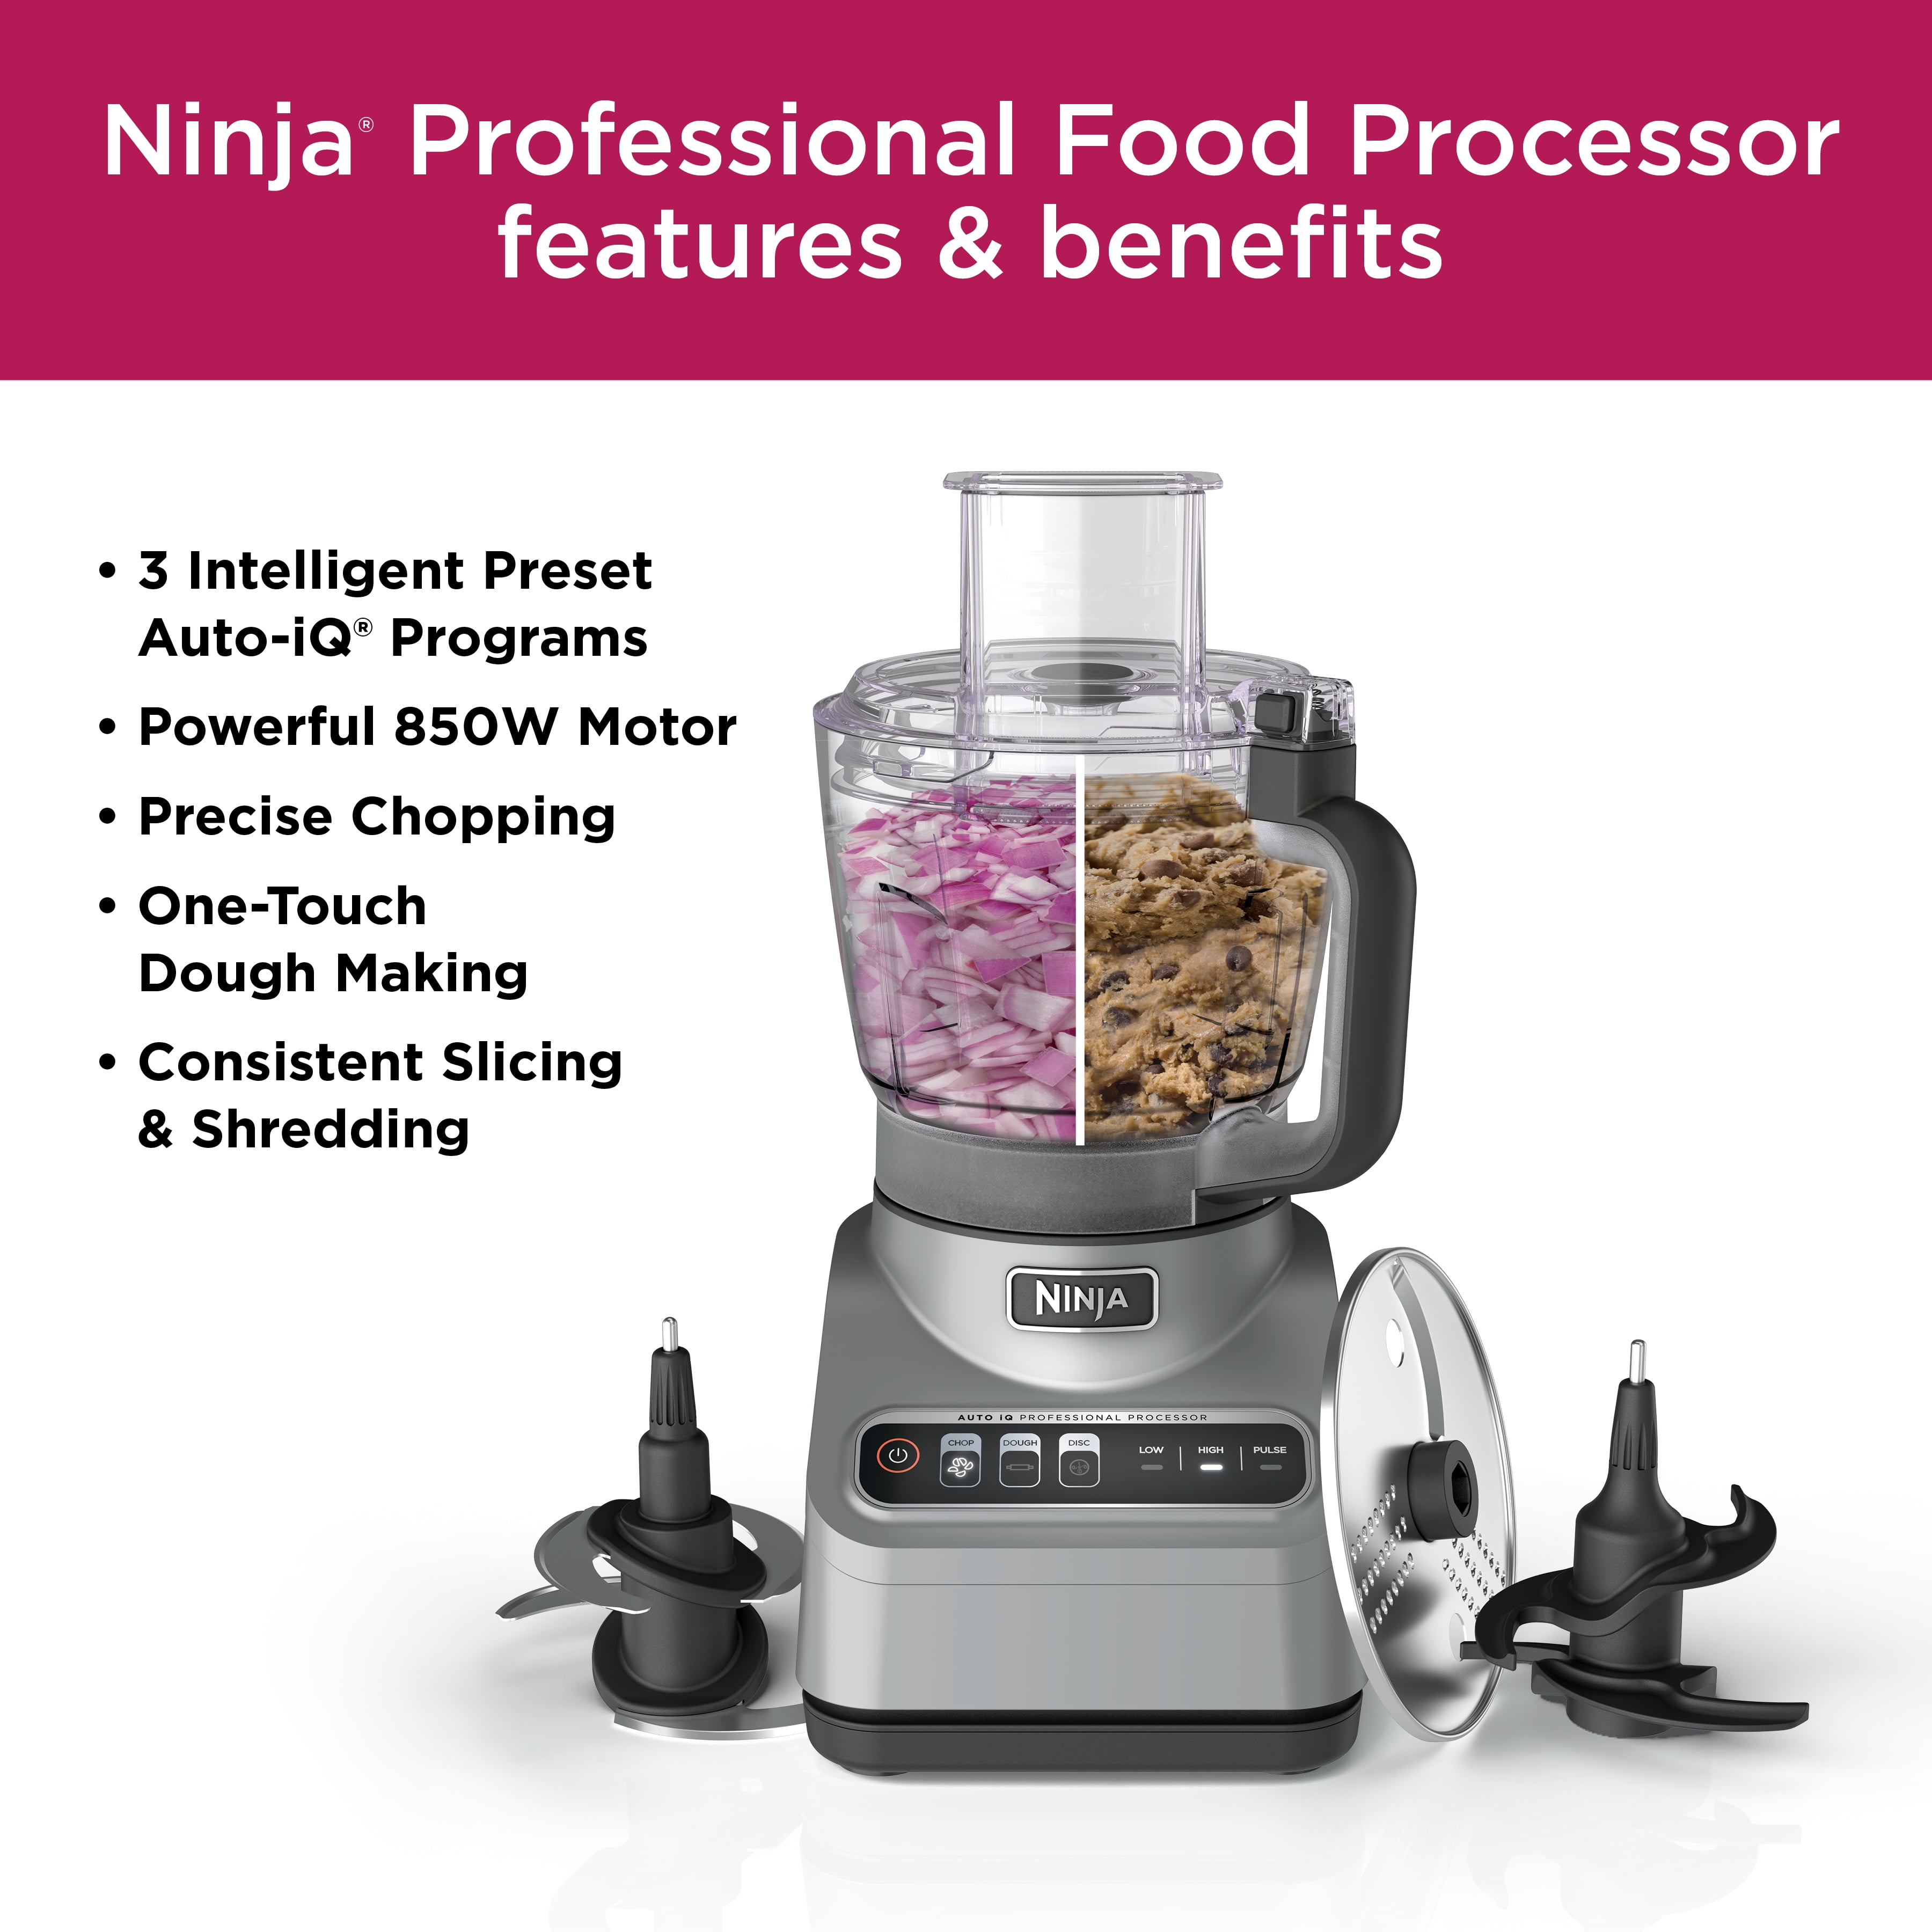 Ninja Professional Food Processor review